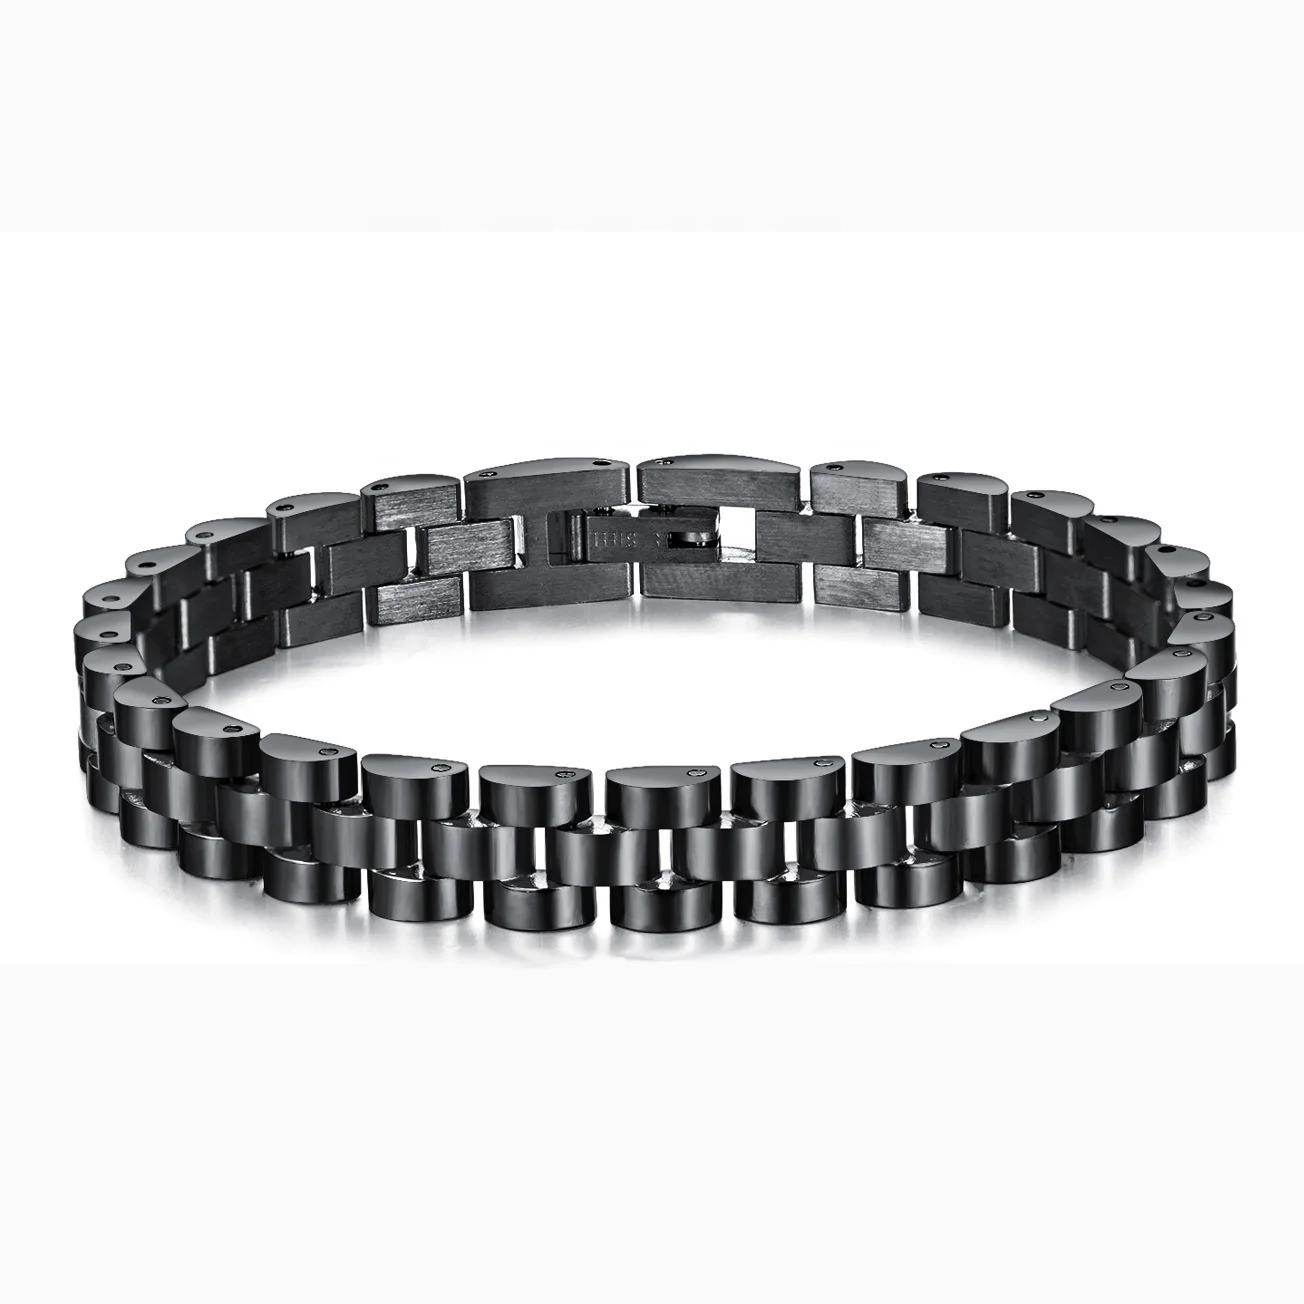 

18k Gold Plated High Quality Titanium Steel Chain Bracelet For Women Men Removable 10mm Width Watch Band Bracelet, Black, silver, gold